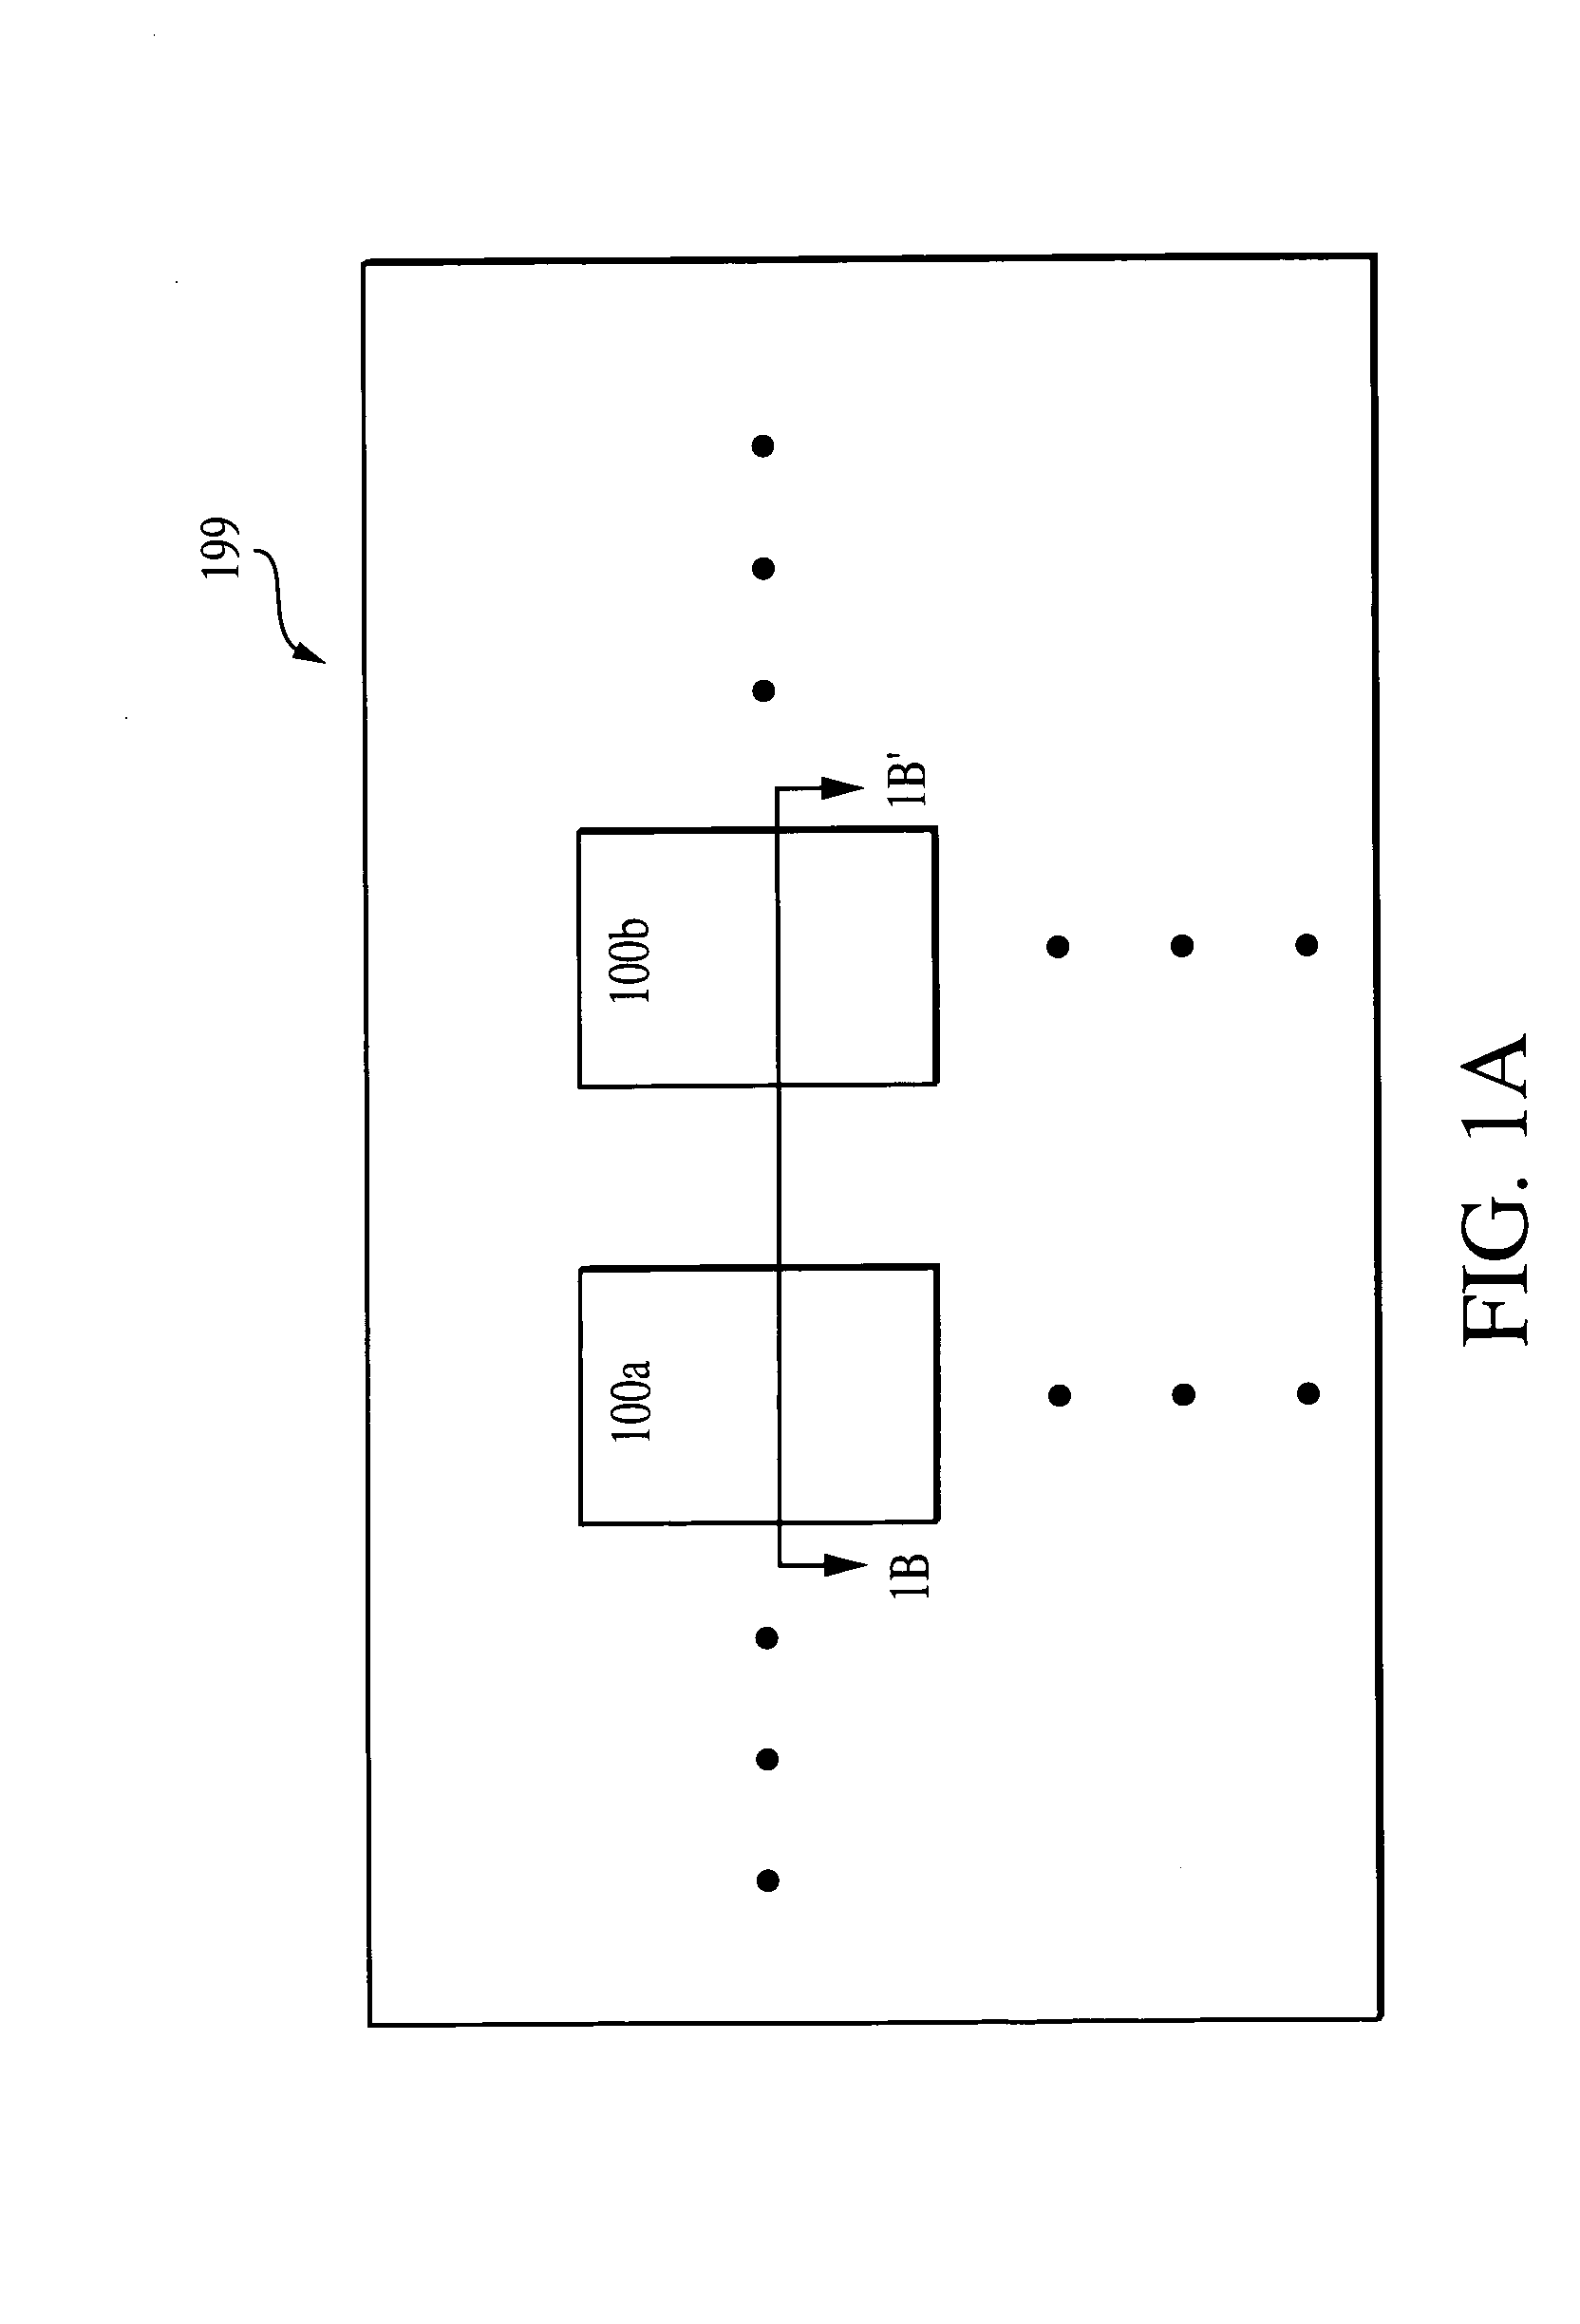 Reduced crosstalk sensor and method of formation